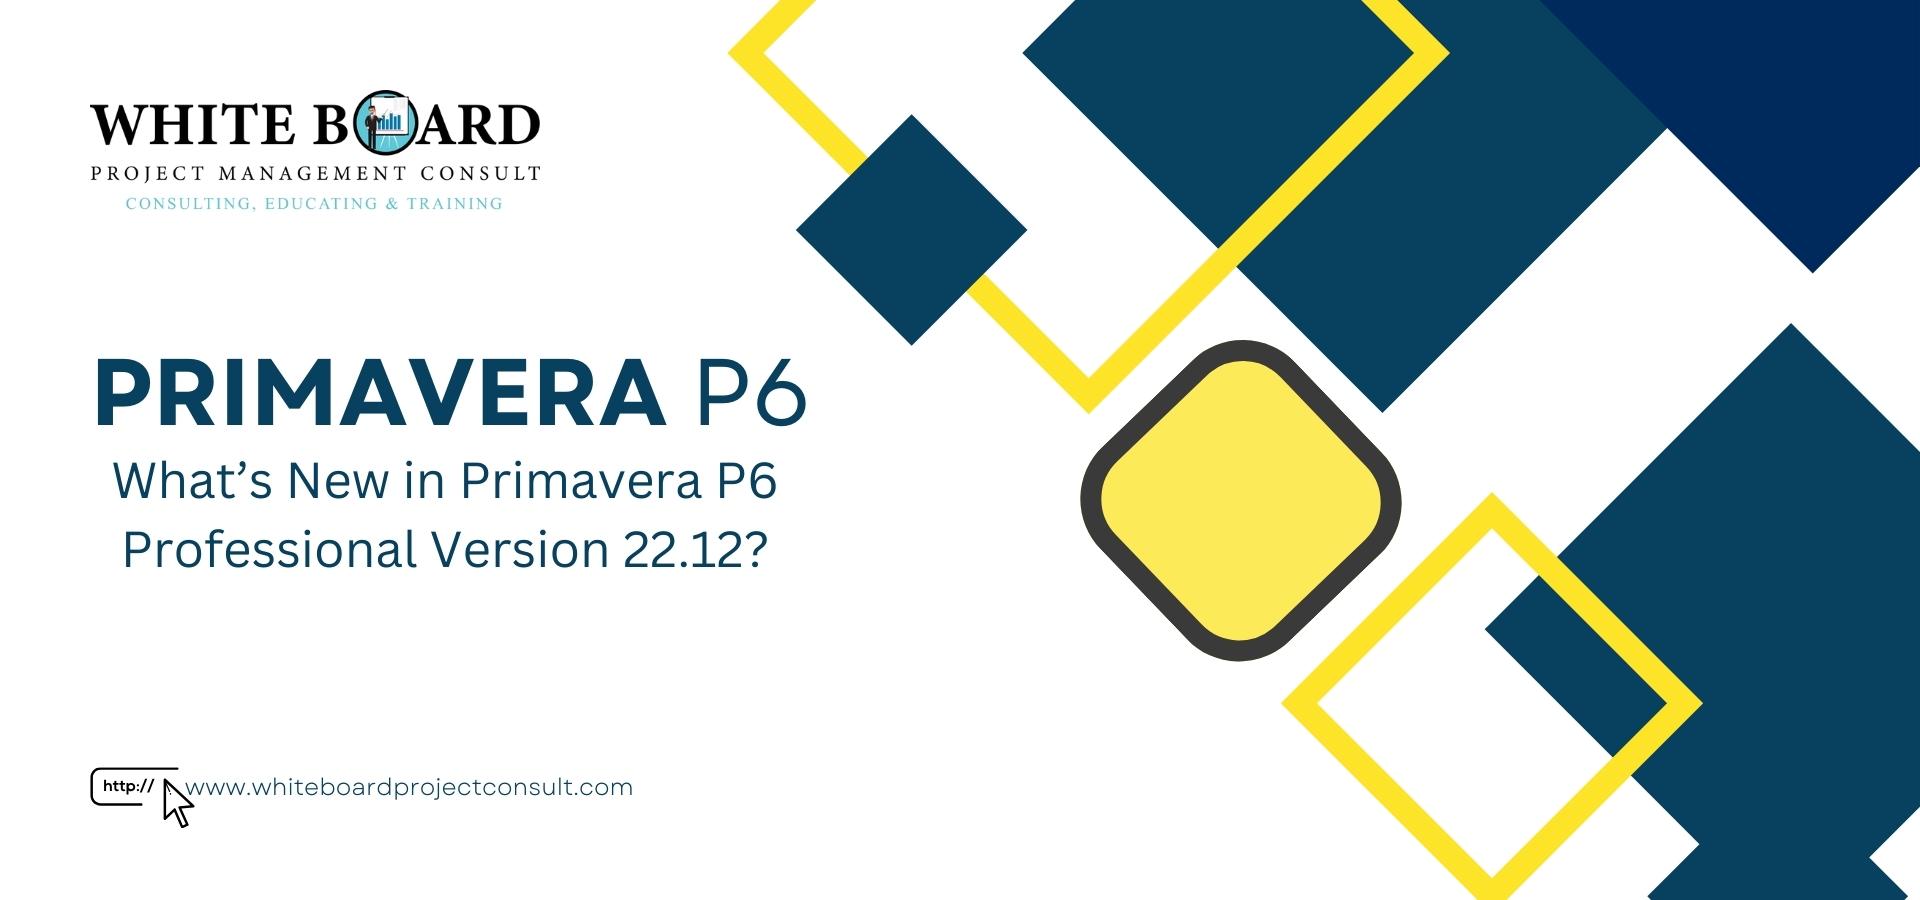 What’s New in Primavera P6 Professional Version 22.12?